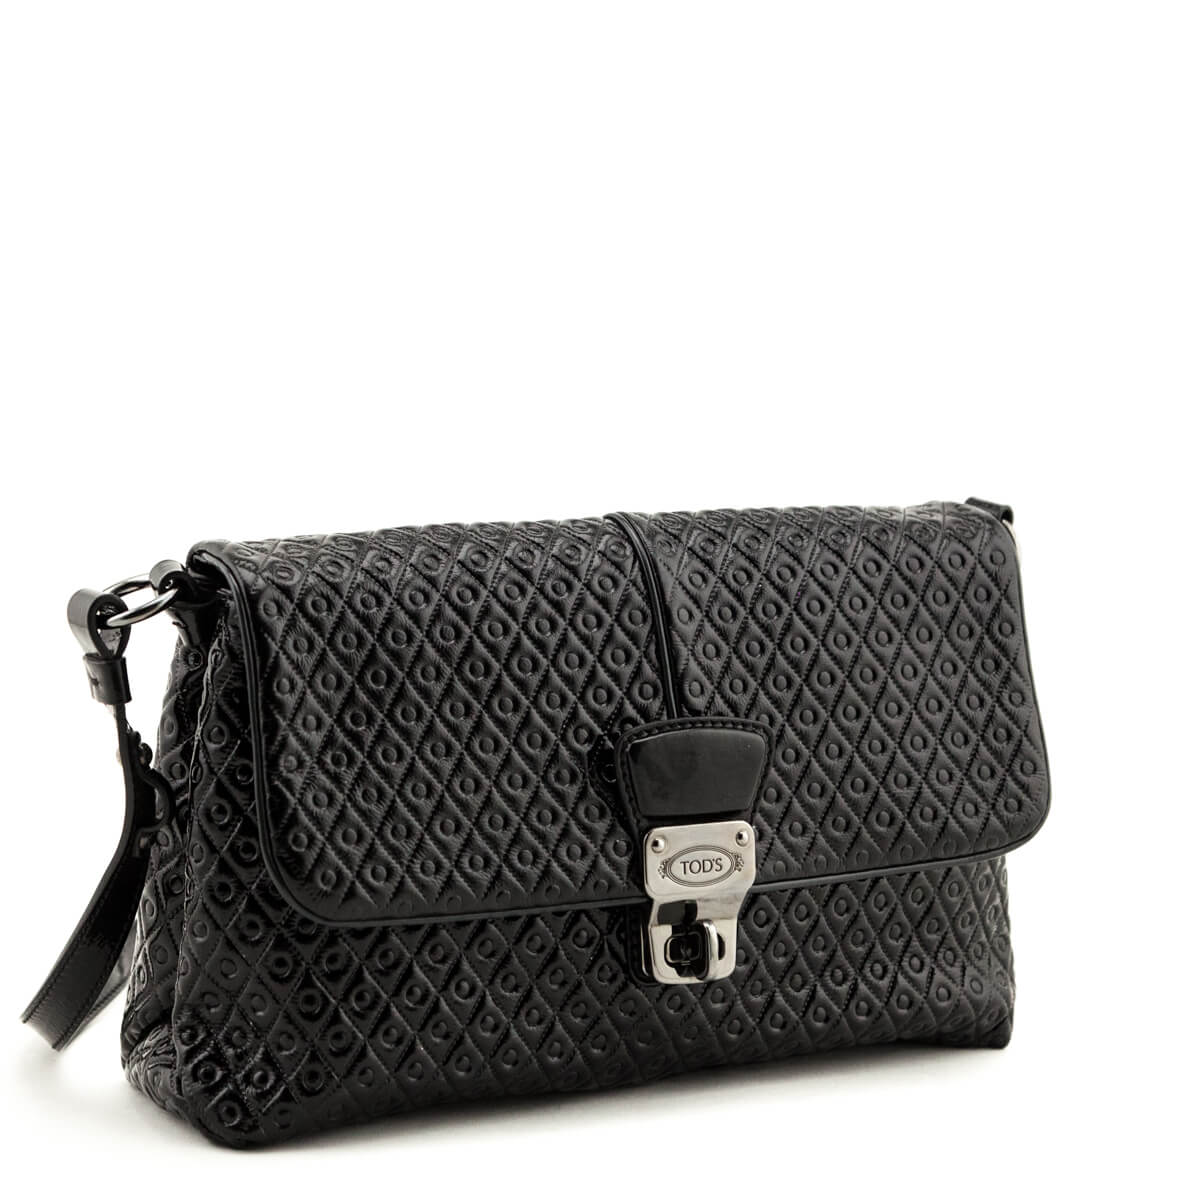 Tod’s Black Patent Chain Shoulder Bag - Used Handbags Canada